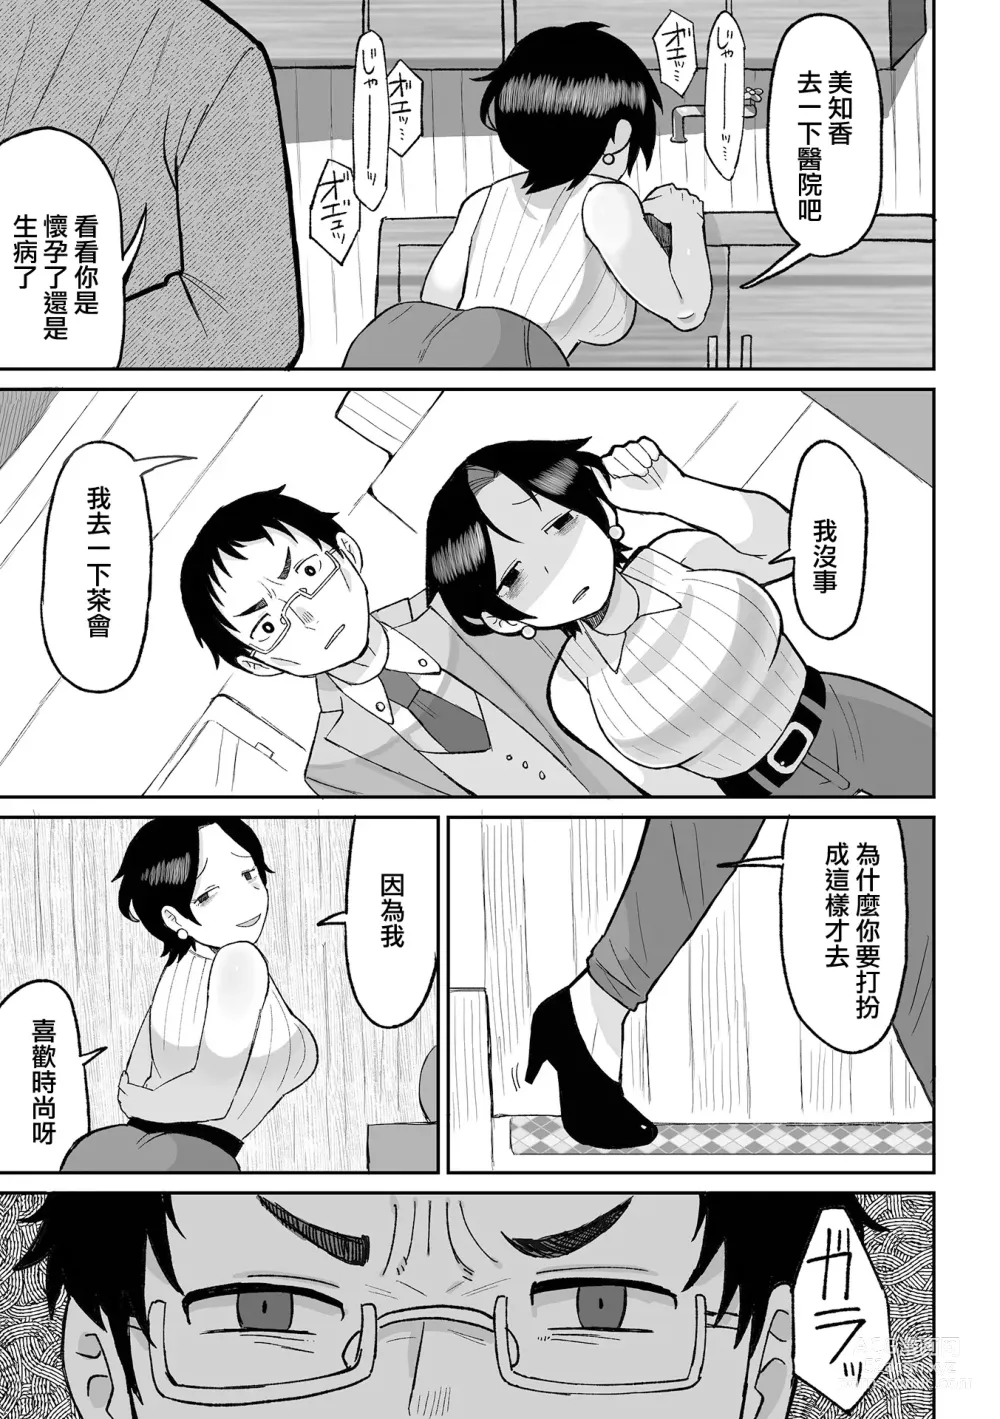 Page 16 of manga 快樂的鄉間生活